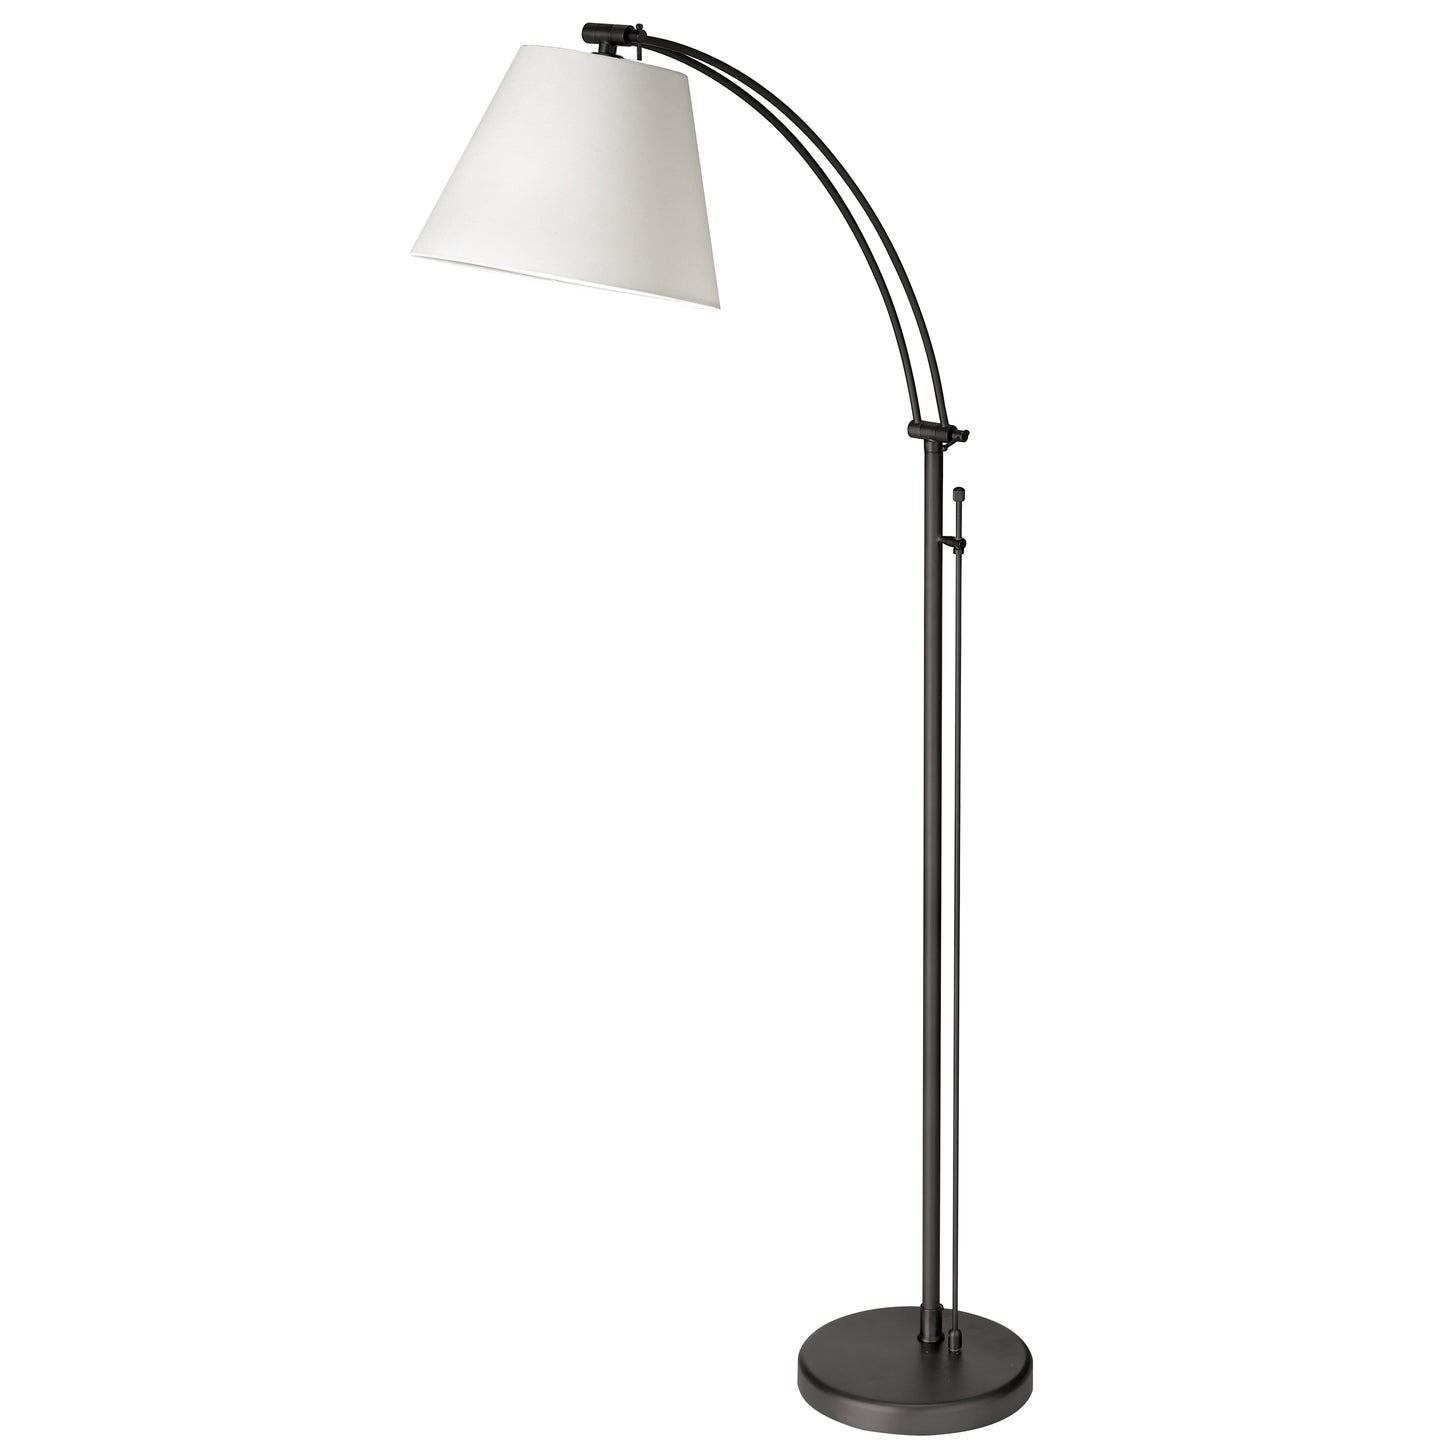 Dainolite DM2578-F-MB 1 Light Incandescent Adjustable Floor Lamp, Matte Black with White Shade